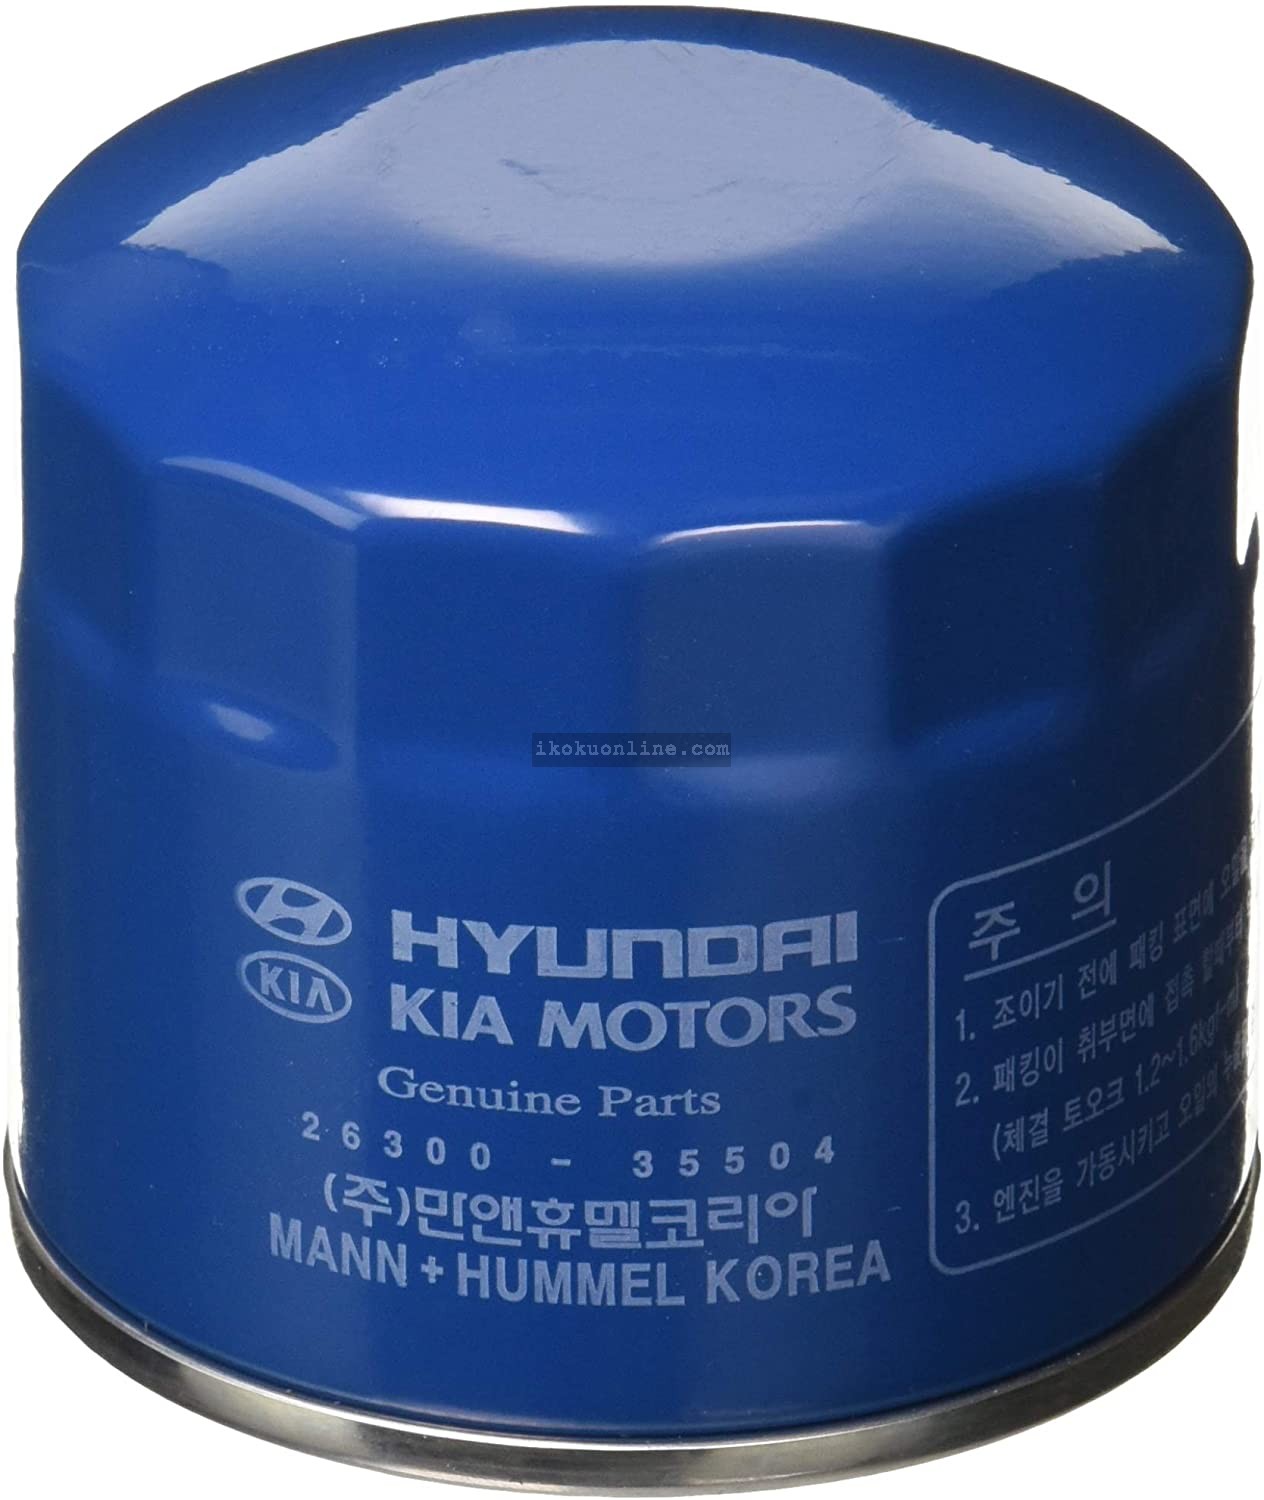 HYUNDAI Genuine 26300-35504 Oil Filter